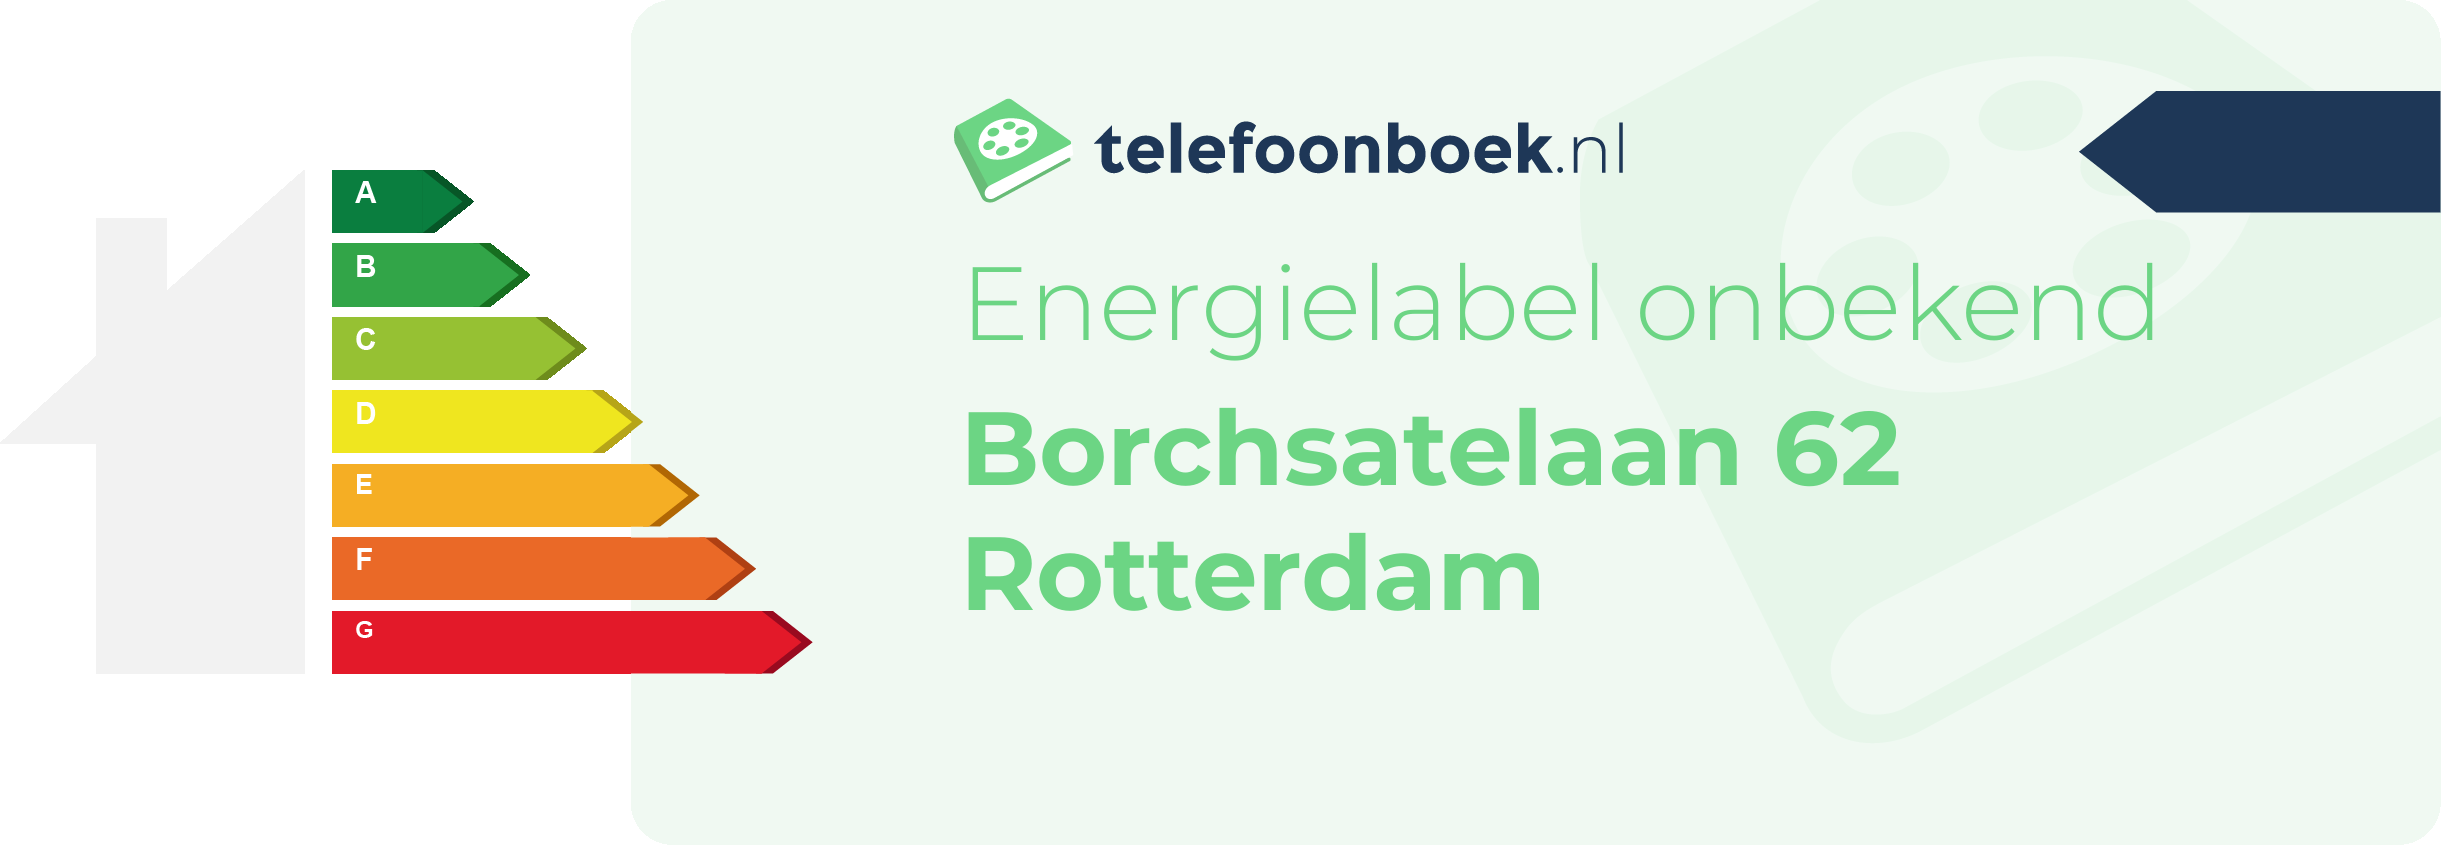 Energielabel Borchsatelaan 62 Rotterdam